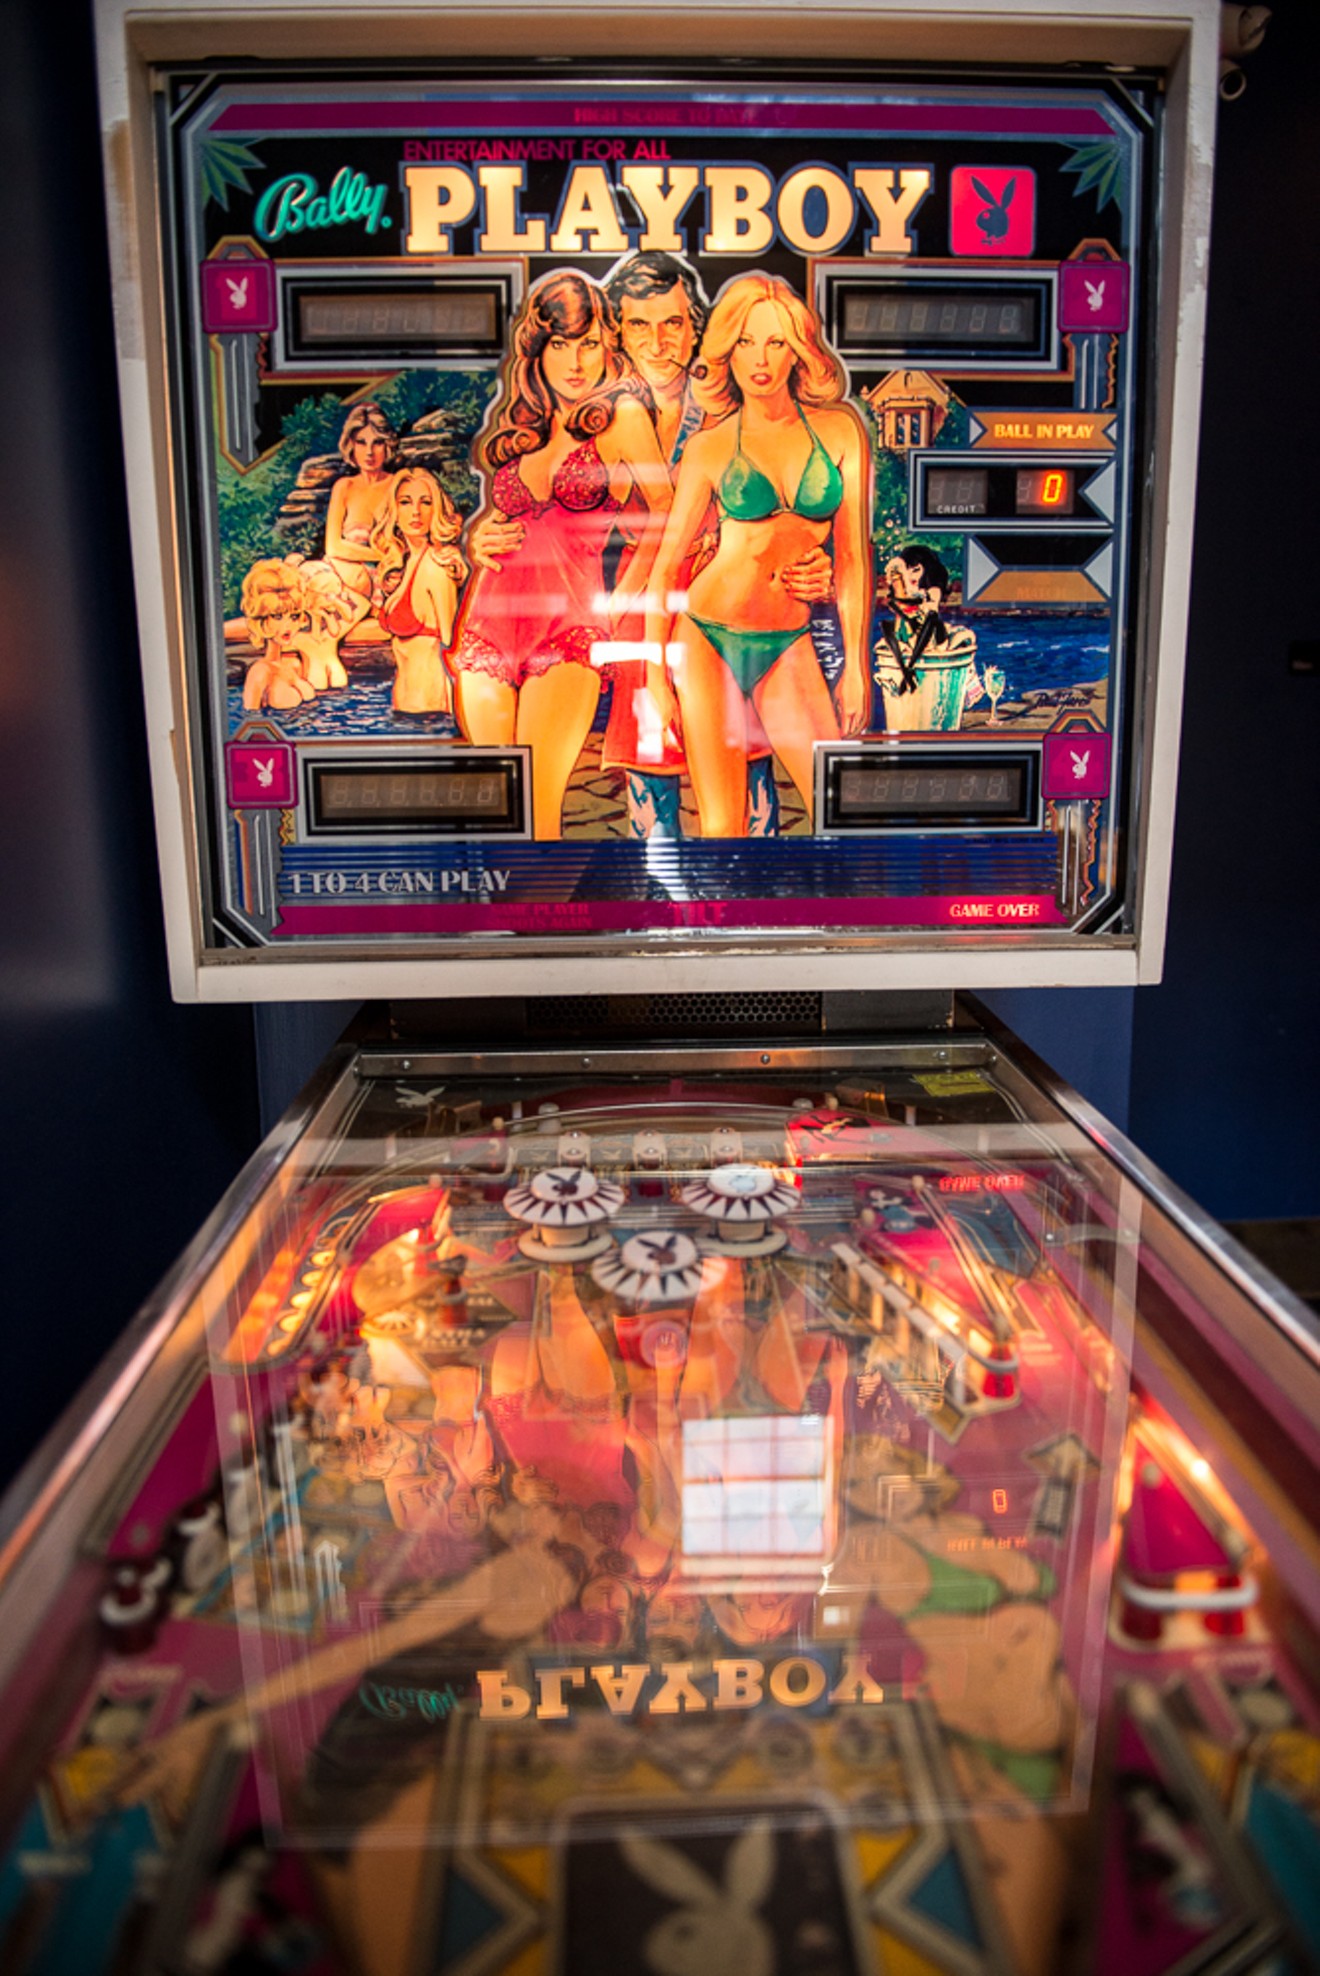 The vintage Playboy pinball machine